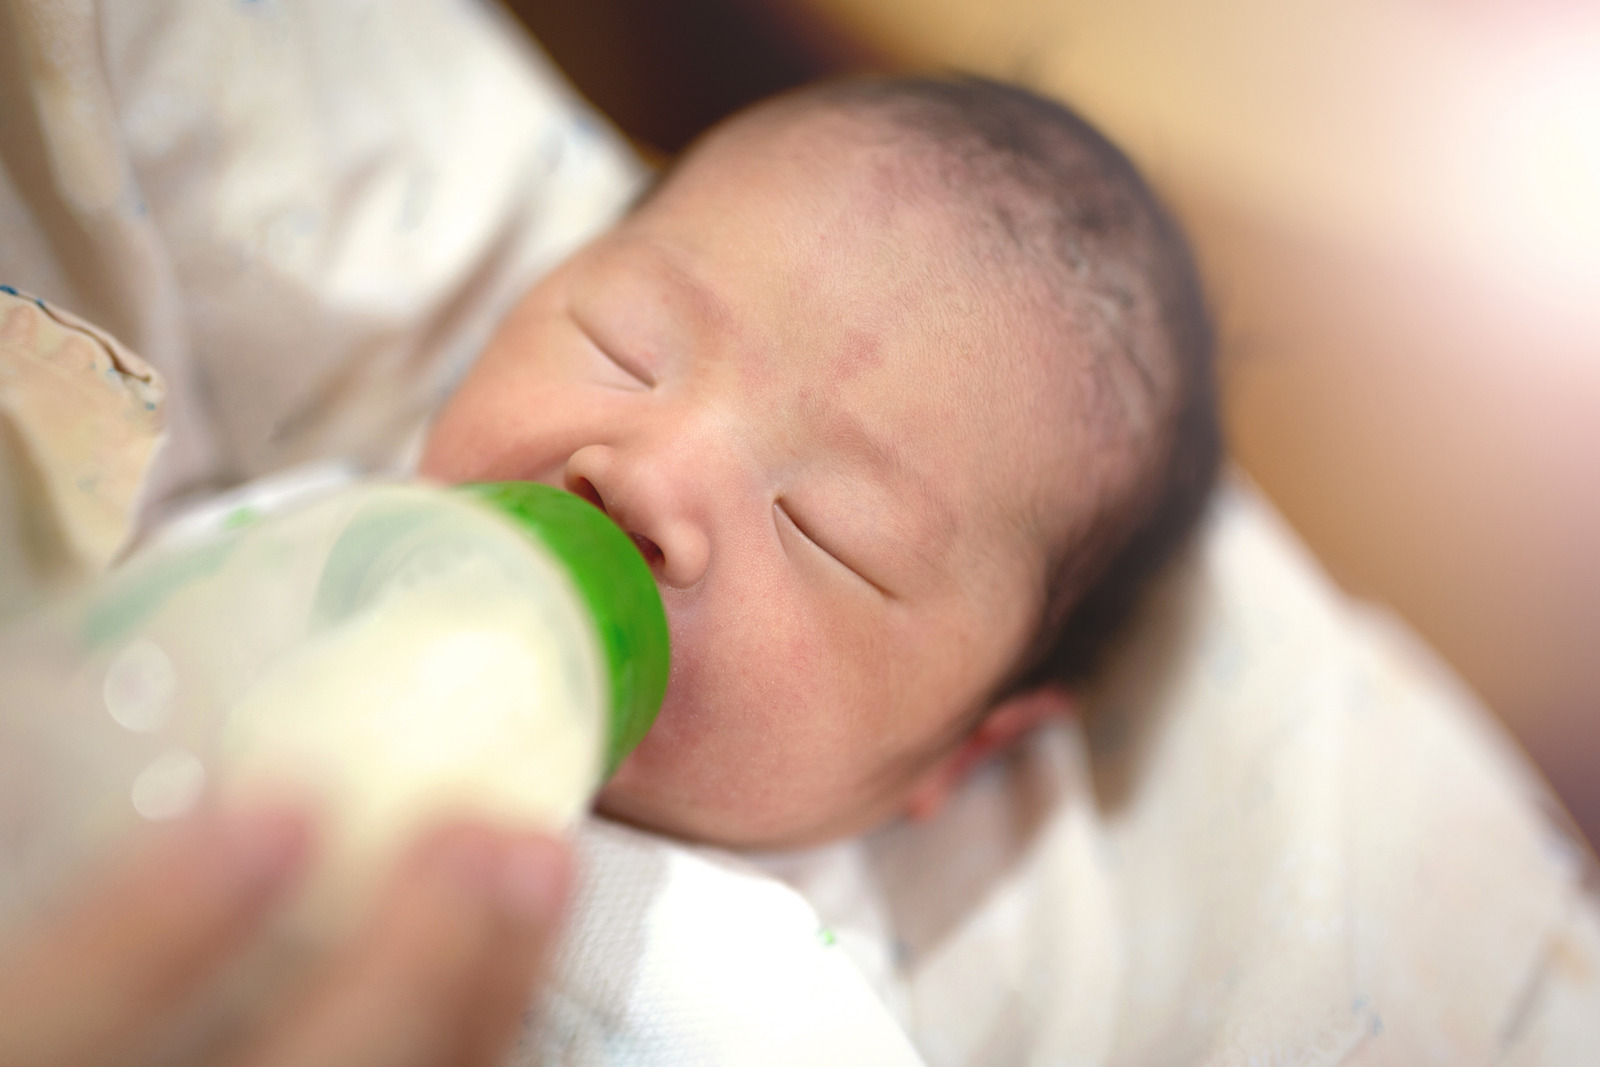 How Much Should a Newborn Eat? - SleepBaby.org